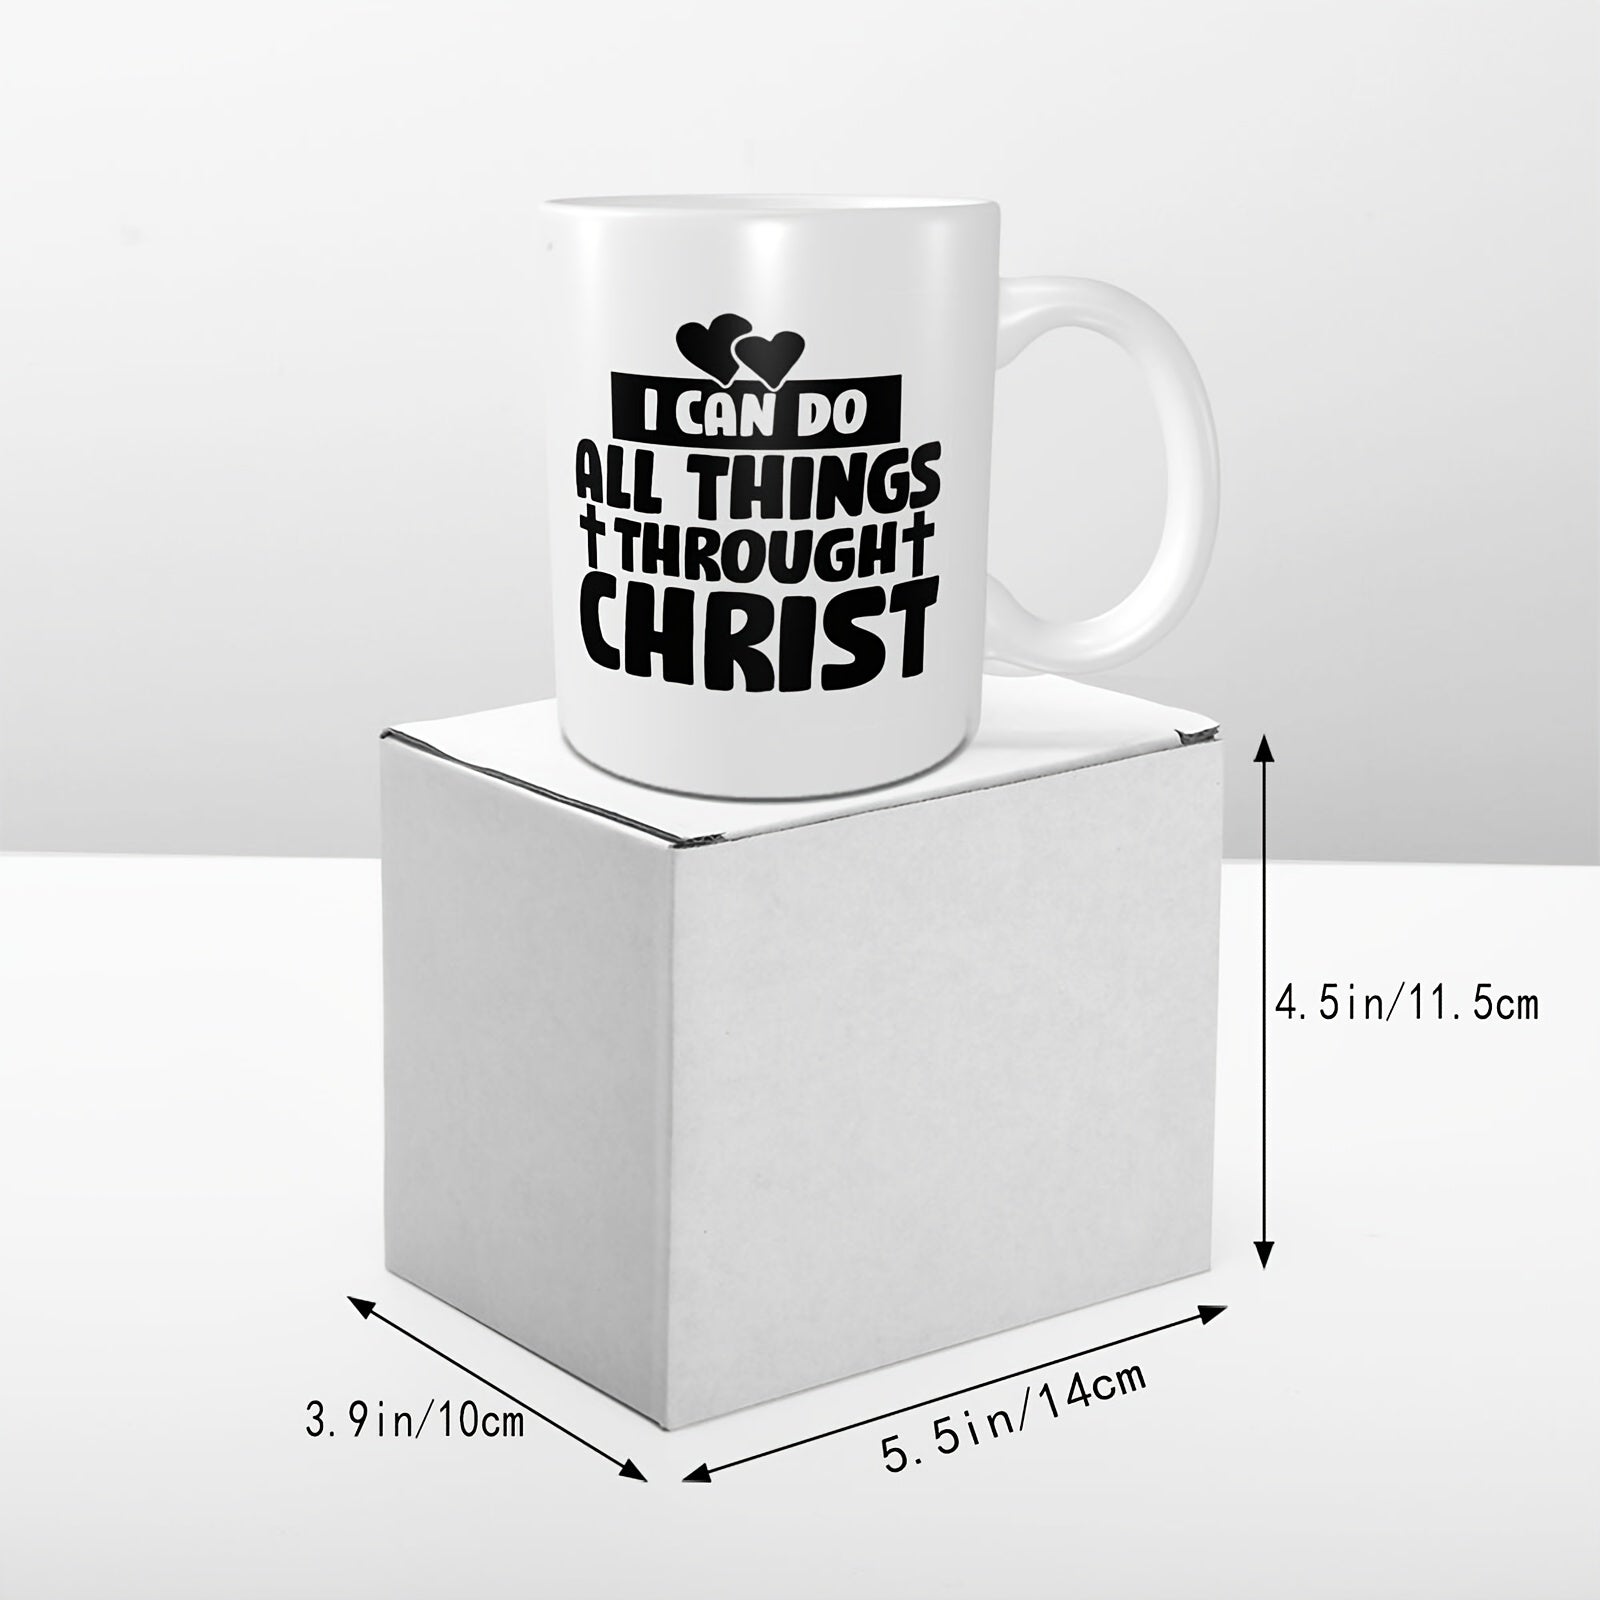 I Can Do All Things Through Christ Coffee Mug, Philippians 4:13 Christian White Ceramic Mug 11oz claimedbygoddesigns